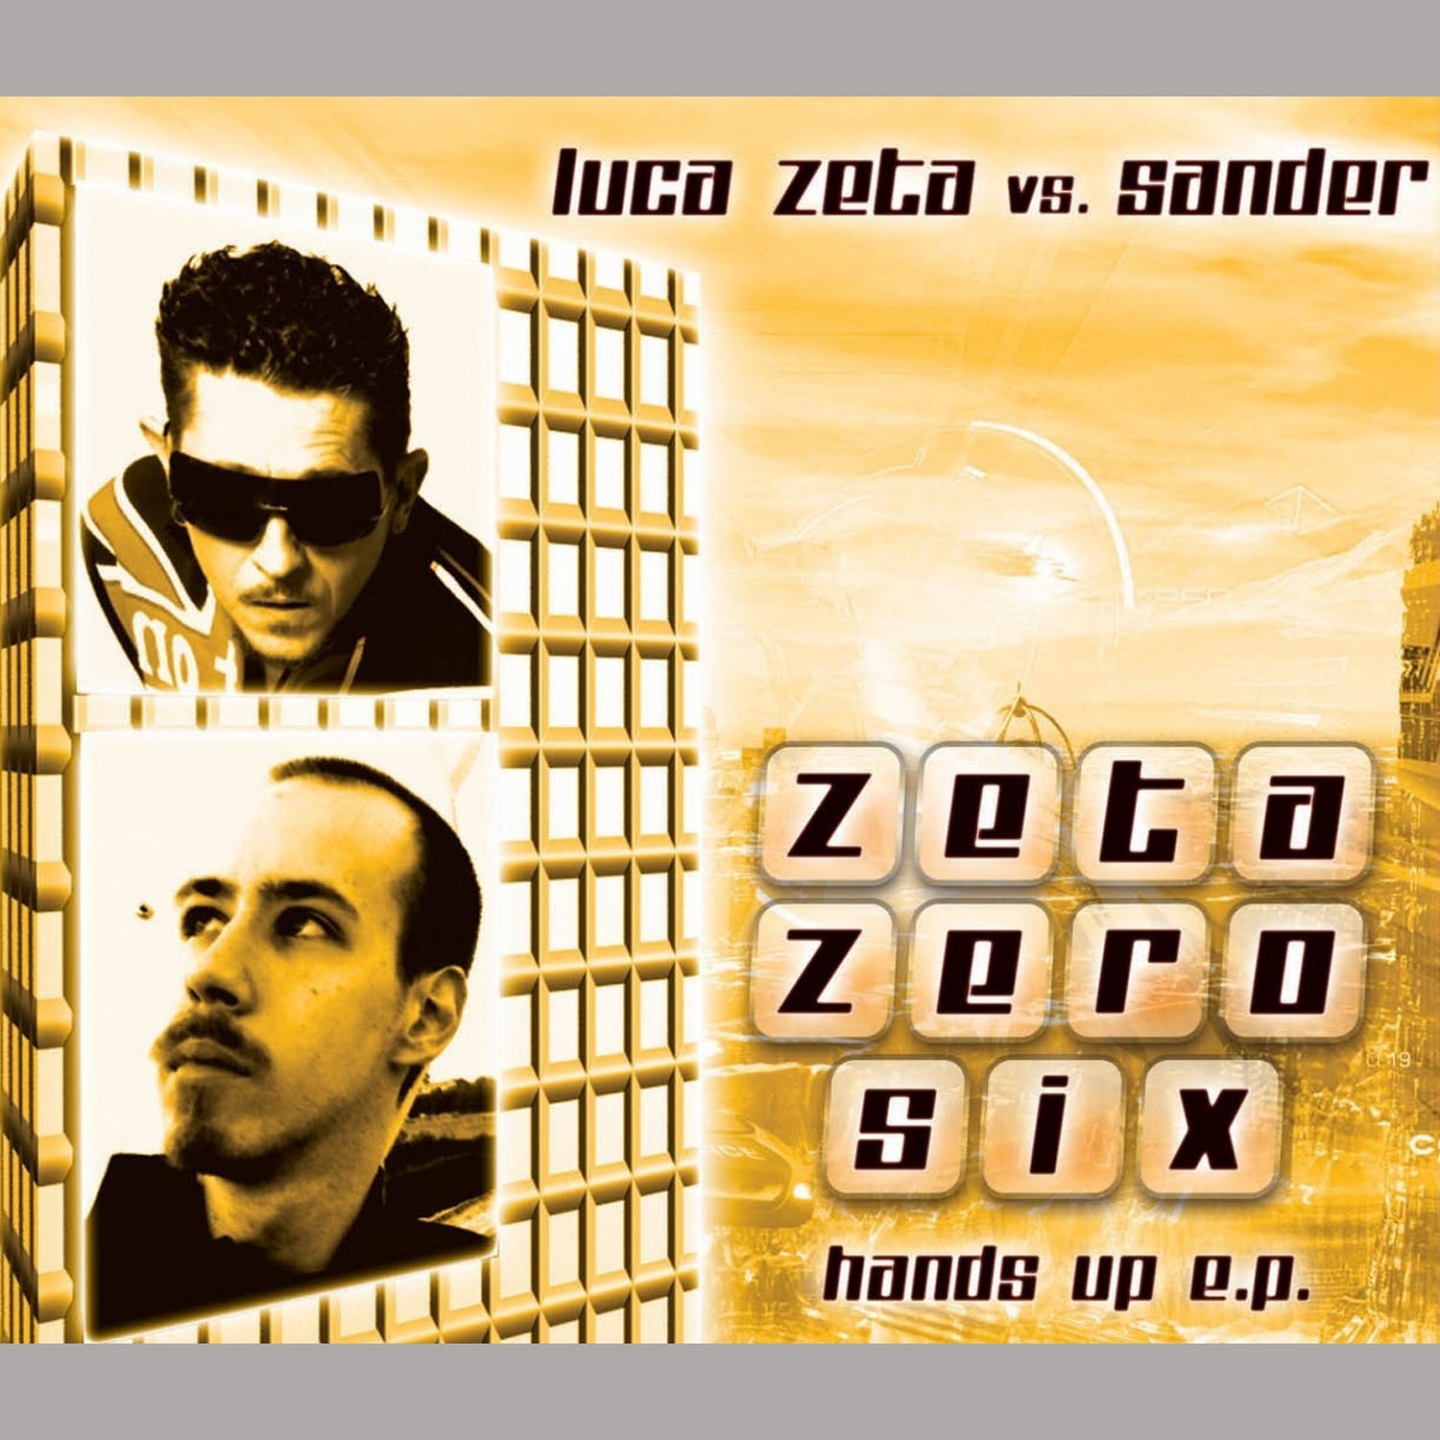 Take Your Time (New Hands up Edit Mix) (Luca Zeta vs. Sander)